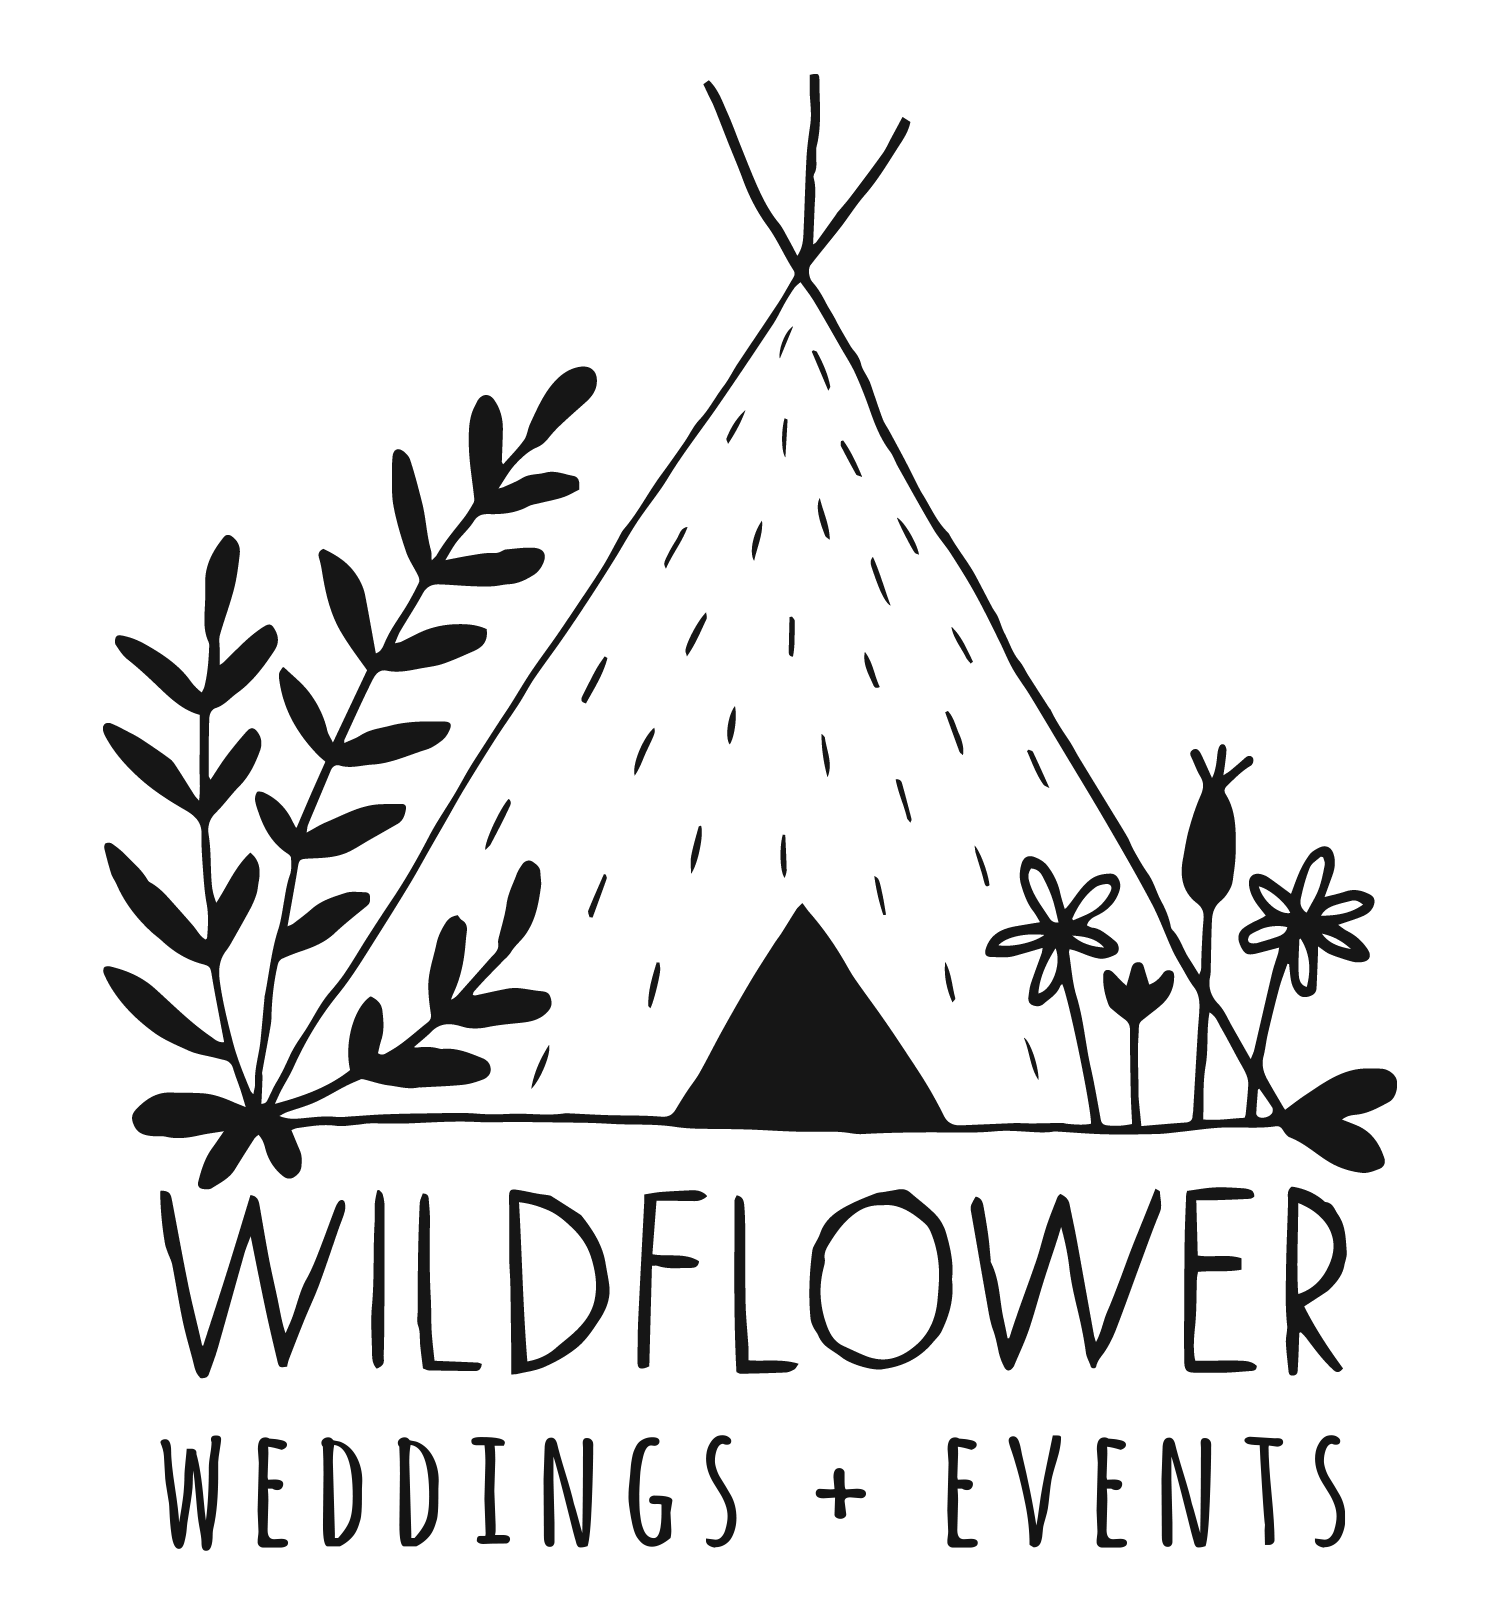 Wildflower Events